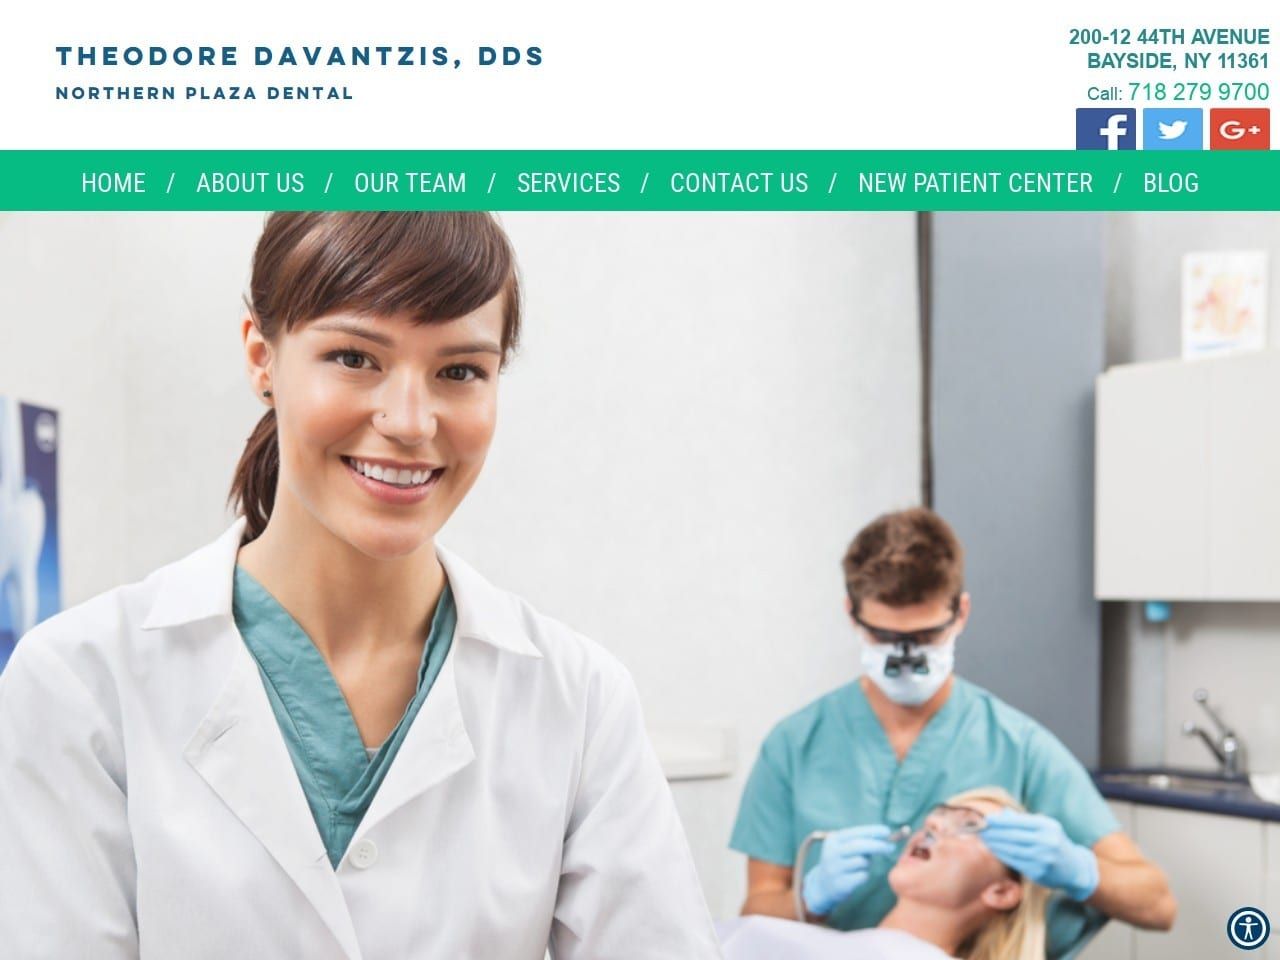 Northern Plaza Dental Care Website Screenshot from nydentalcare.com